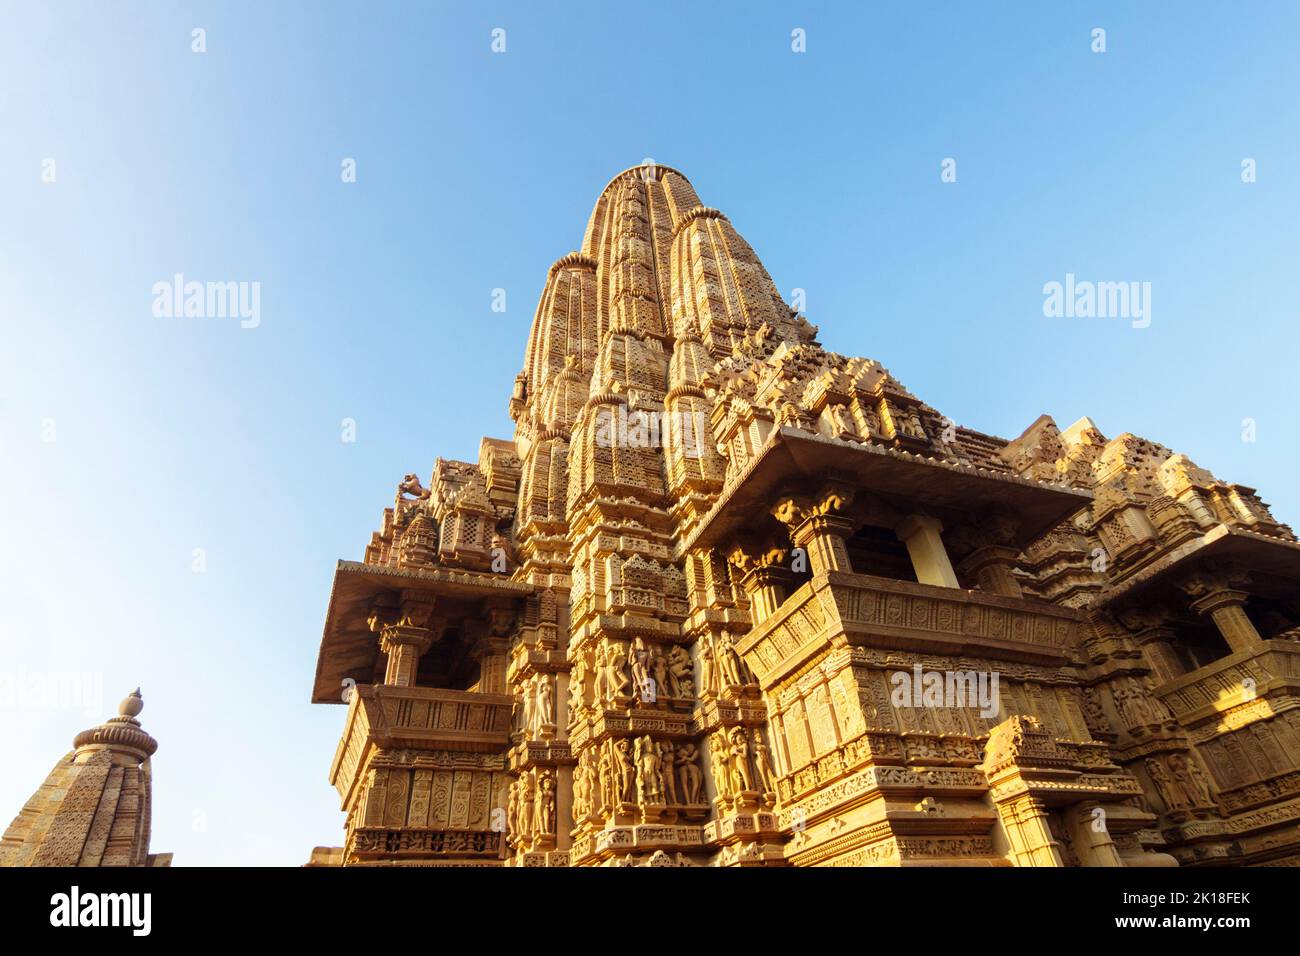 Khajuraho, Madhya Pradesh, India : ángulo bajo de la torre principal del Templo de Kandariya Mahadeva parte del grupo occidental del Patrimonio Mundial de la UNESCO Foto de stock